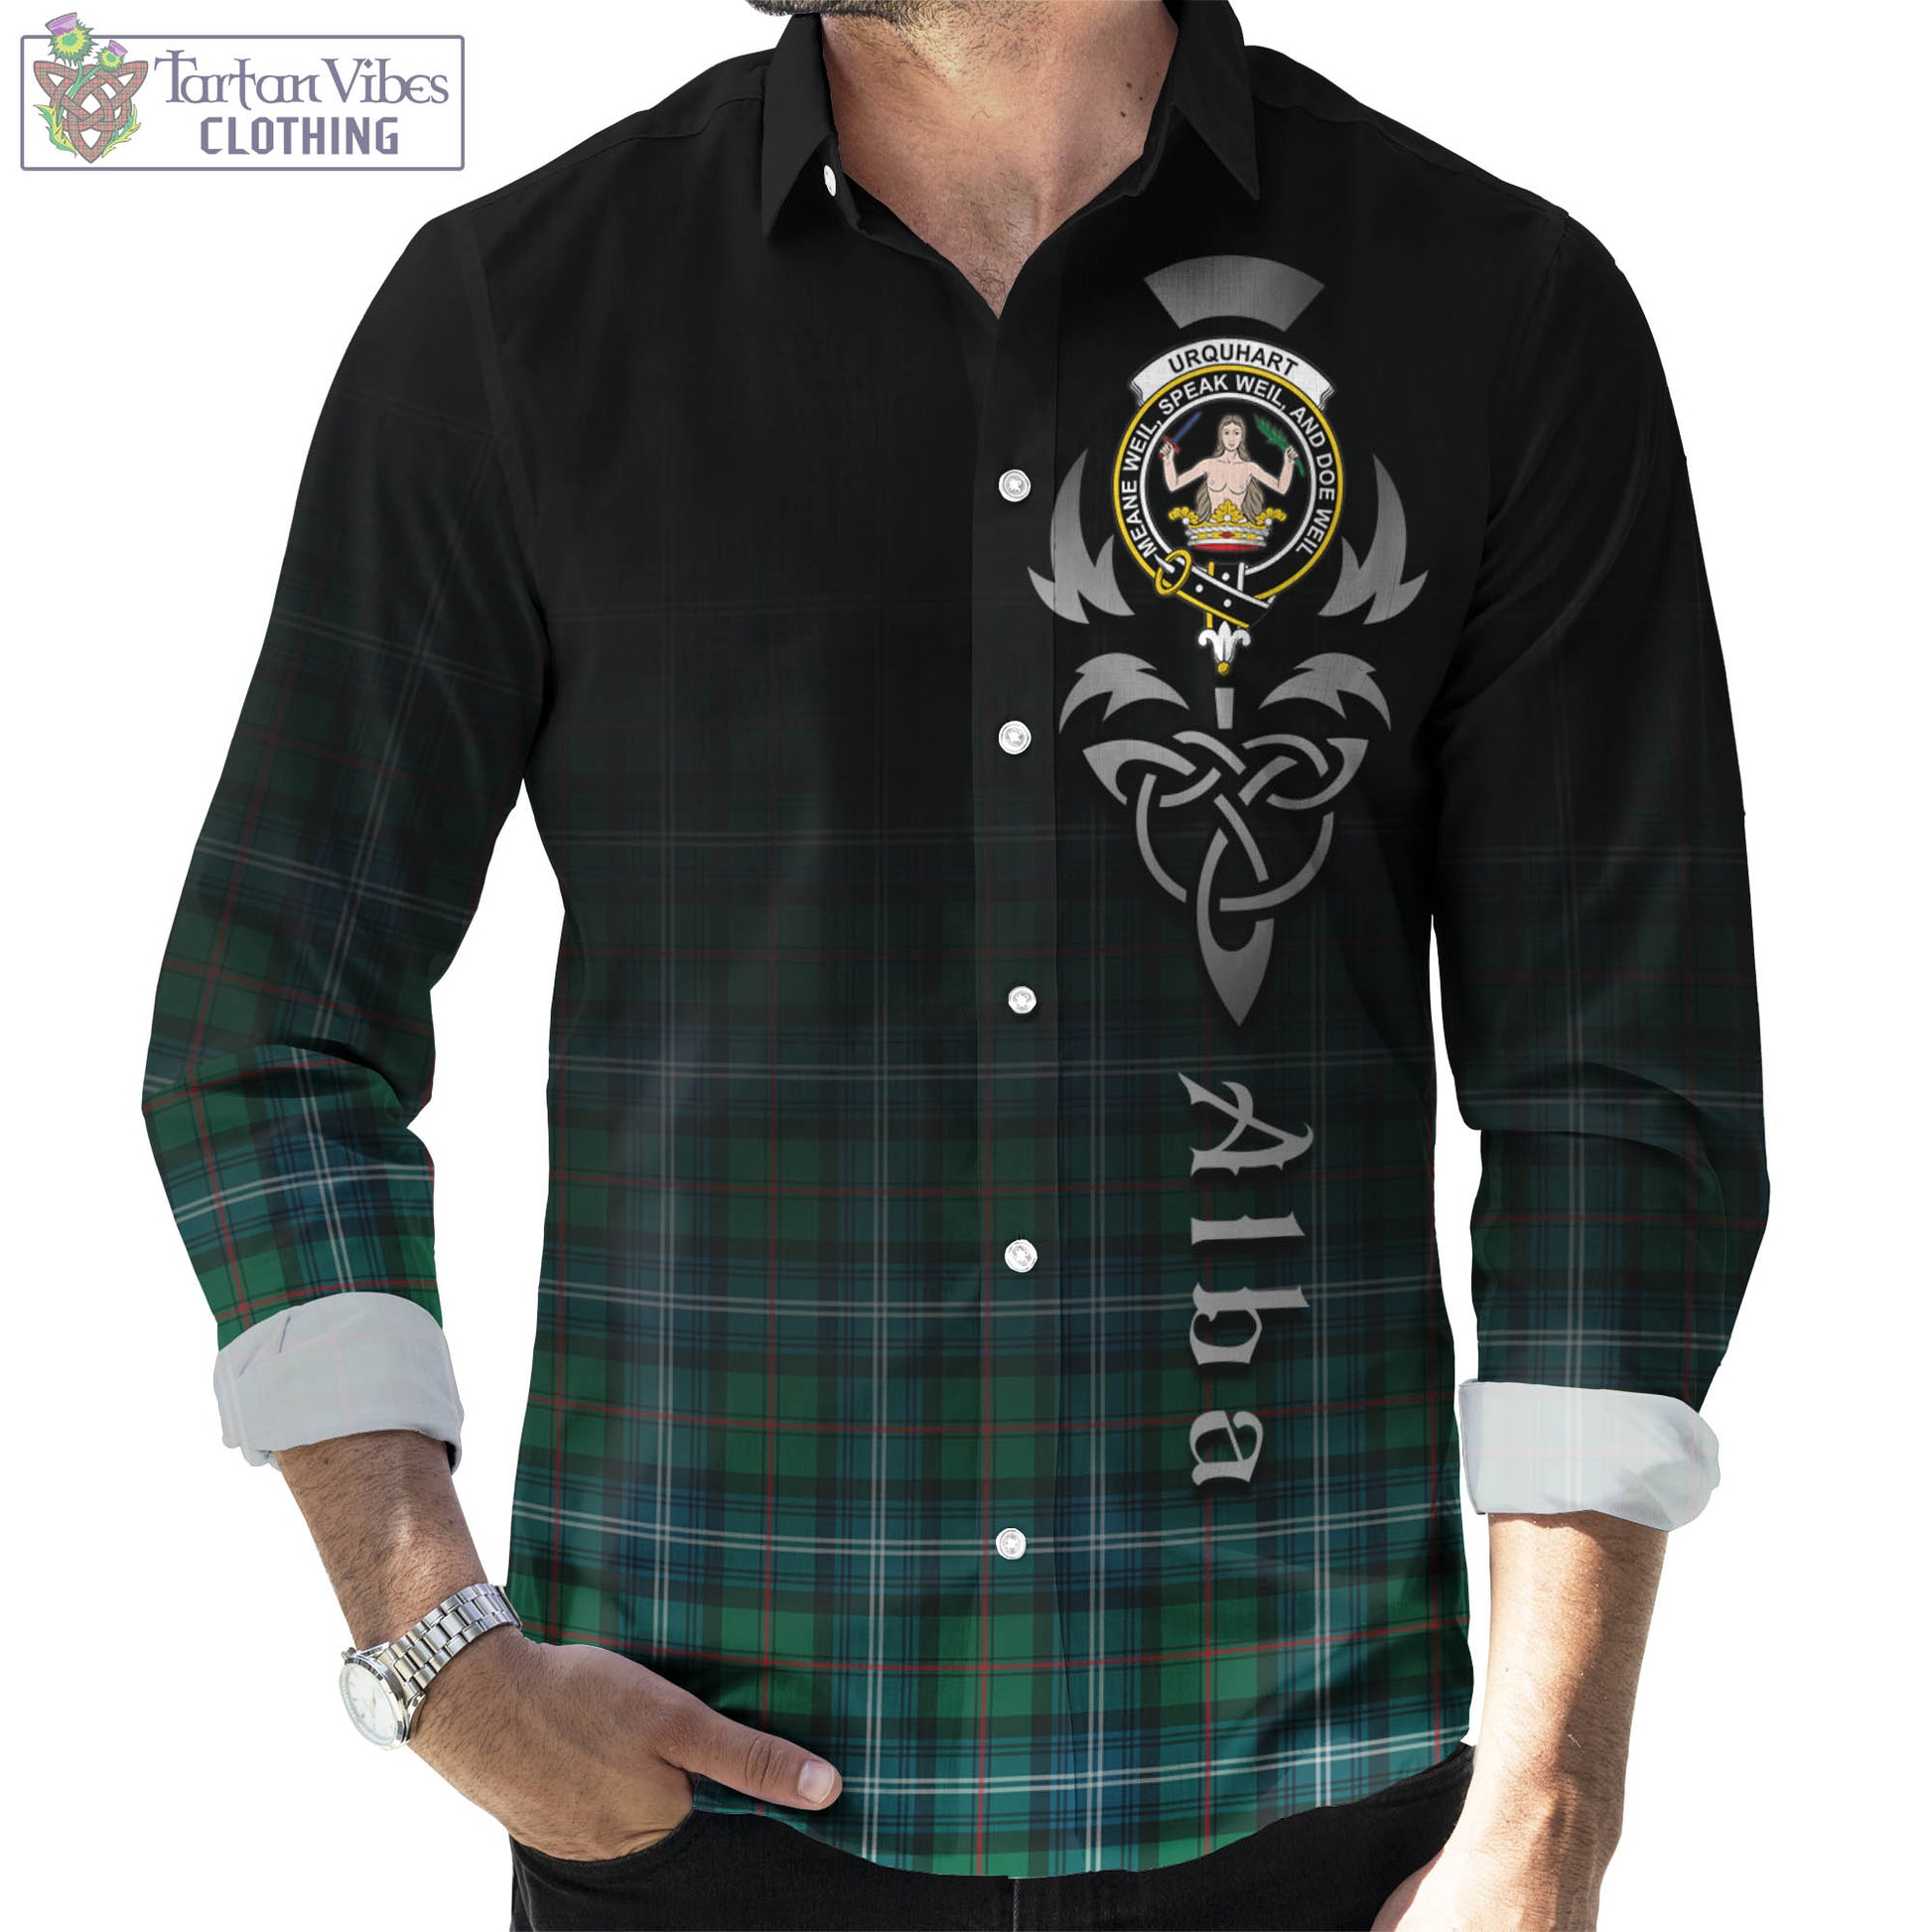 Tartan Vibes Clothing Urquhart Ancient Tartan Long Sleeve Button Up Featuring Alba Gu Brath Family Crest Celtic Inspired